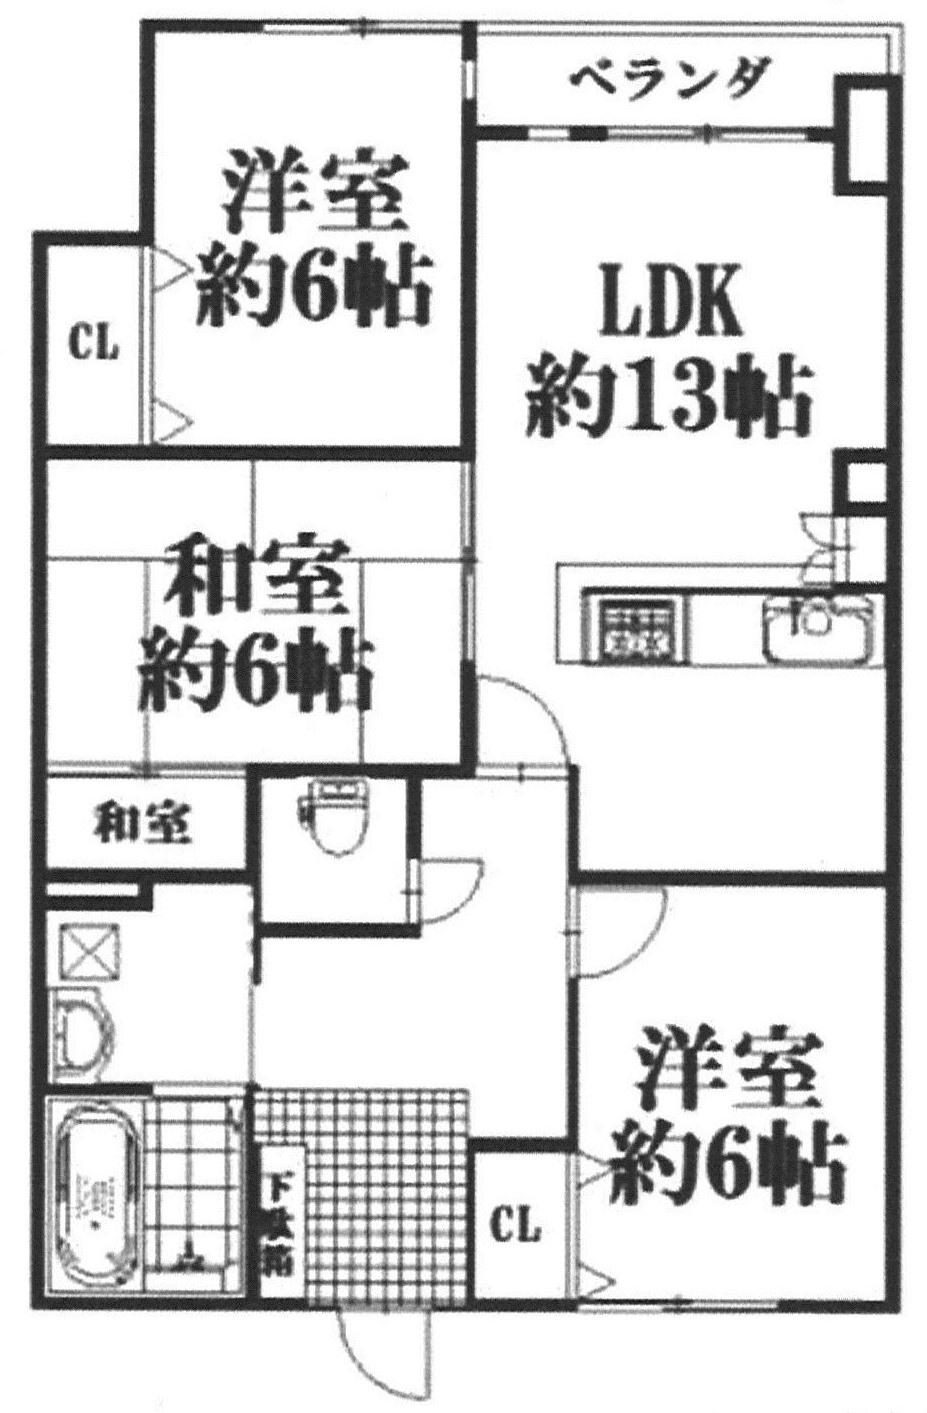 Floor plan. 3LDK, Price 16.8 million yen, Occupied area 67.89 sq m , Balcony area 5.13 sq m